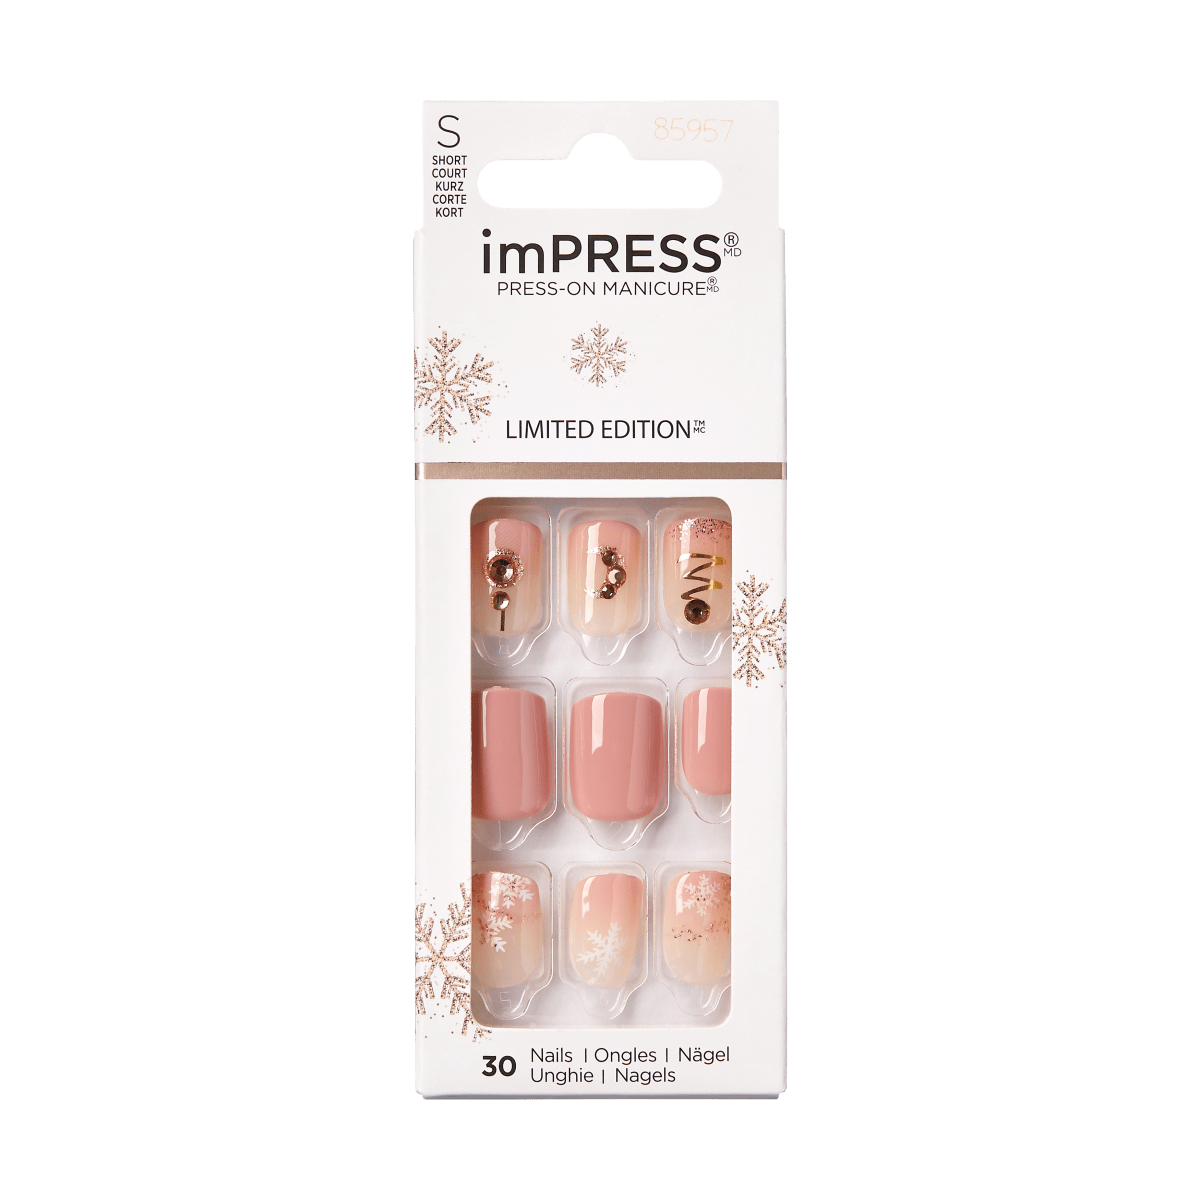 imPRESS Press-On Manicure Limited Edition Holiday - Faithful